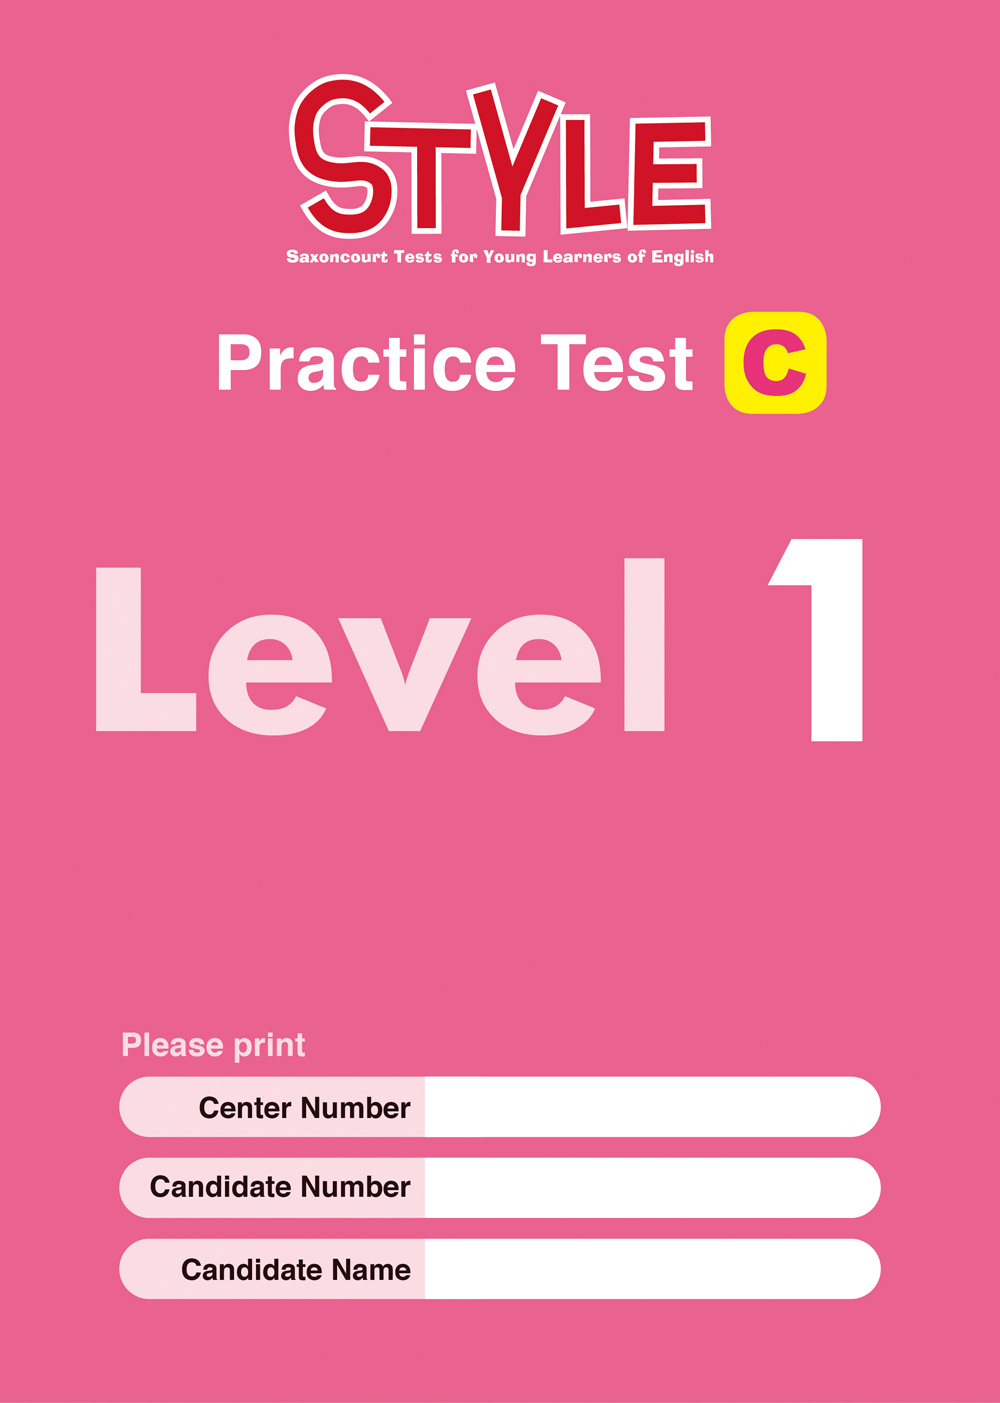 STYLE Practice Test C Level 1iCj(QR CODE)